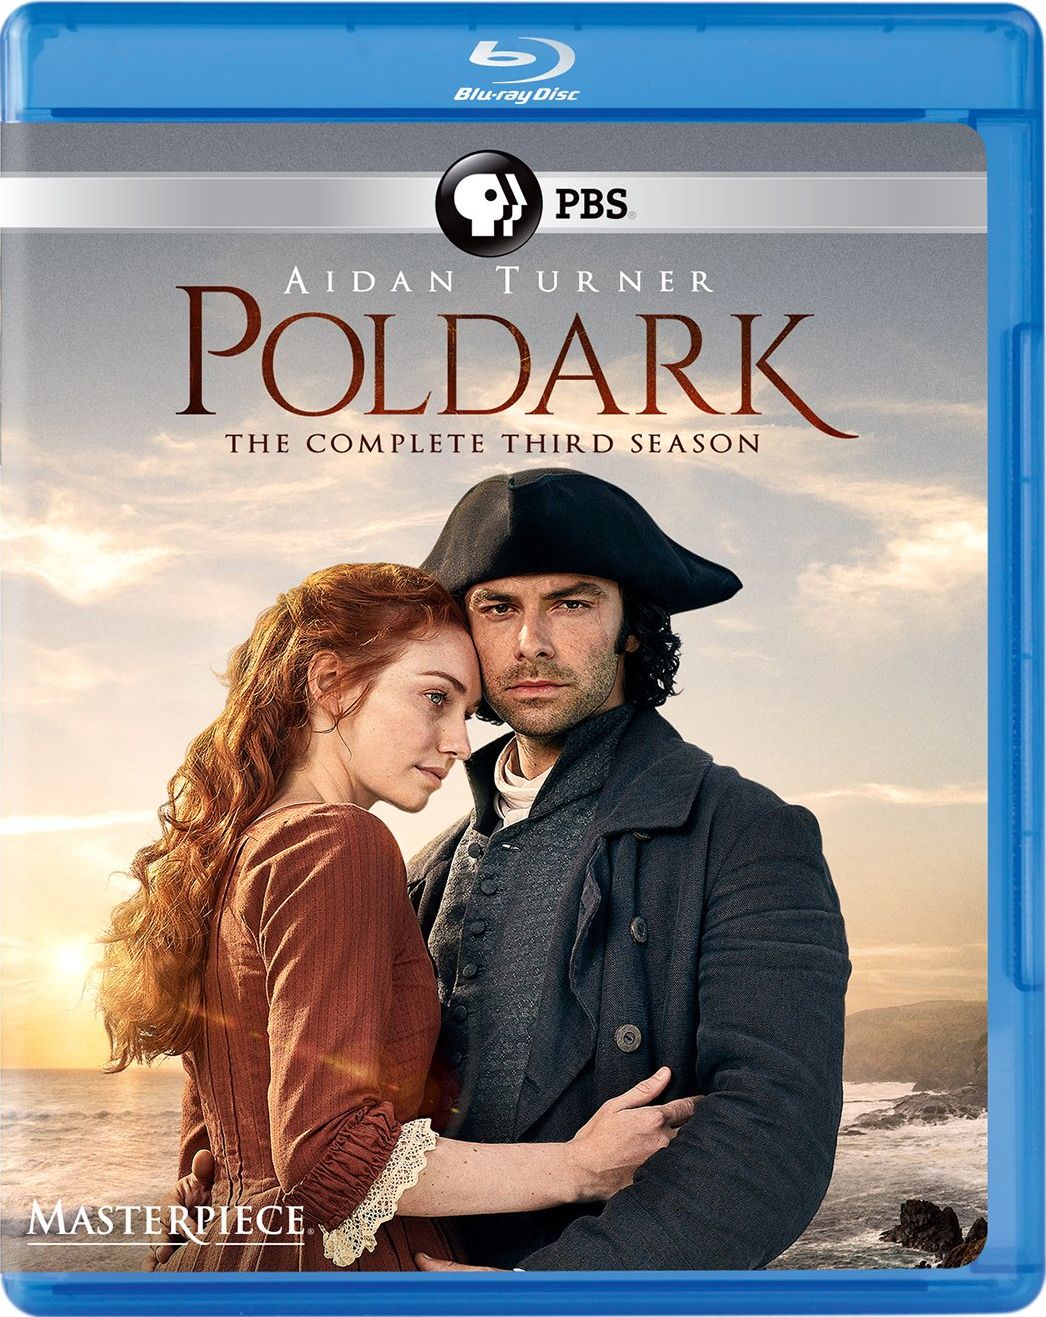 Poldark DVD Release Date